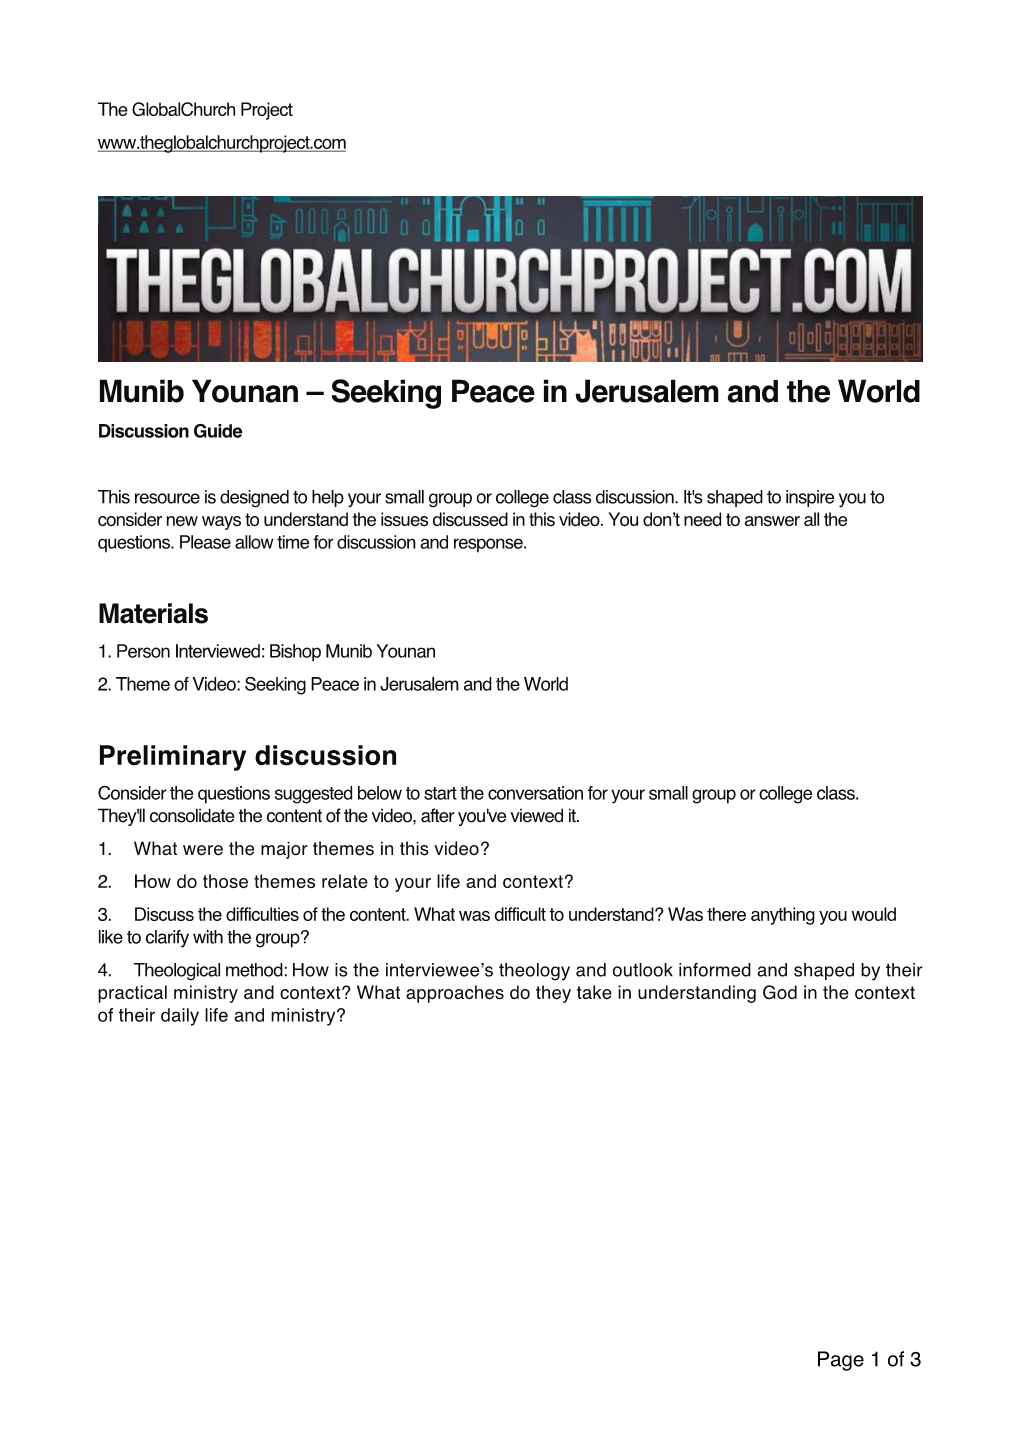 Munib Younan – Seeking Peace in Jerusalem and the World Discussion Guide